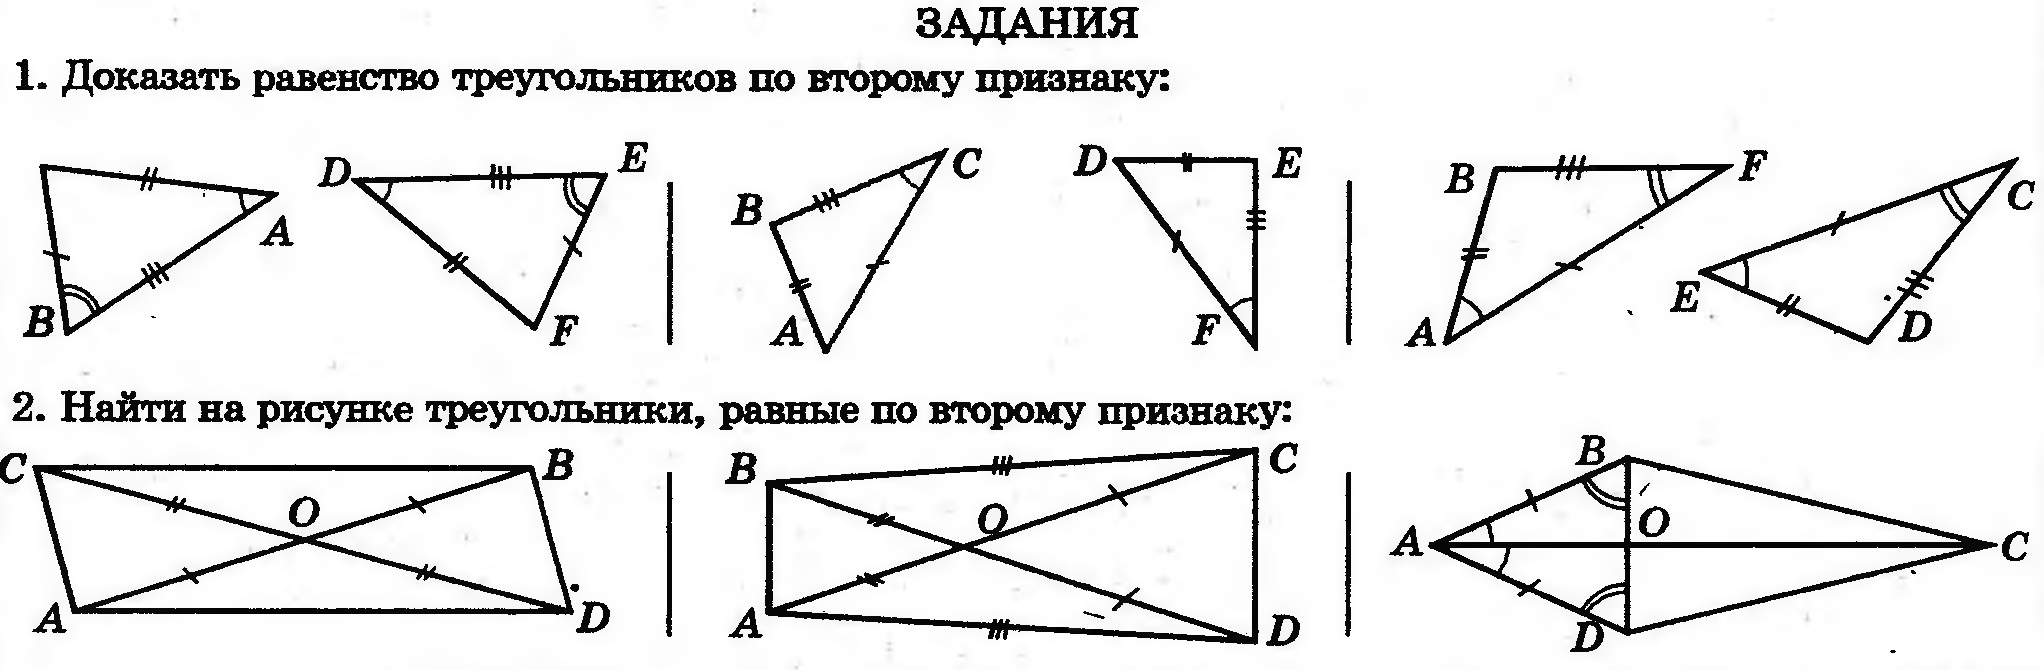 Тест треугольники признаки равенства треугольников ответы. 2 Признак равенства треугольников задачи. Задачи на равенство треугольников 7 класс. Задачи на признаки равенства треугольников 7 класс. Задачи на равенство треугольников 7.